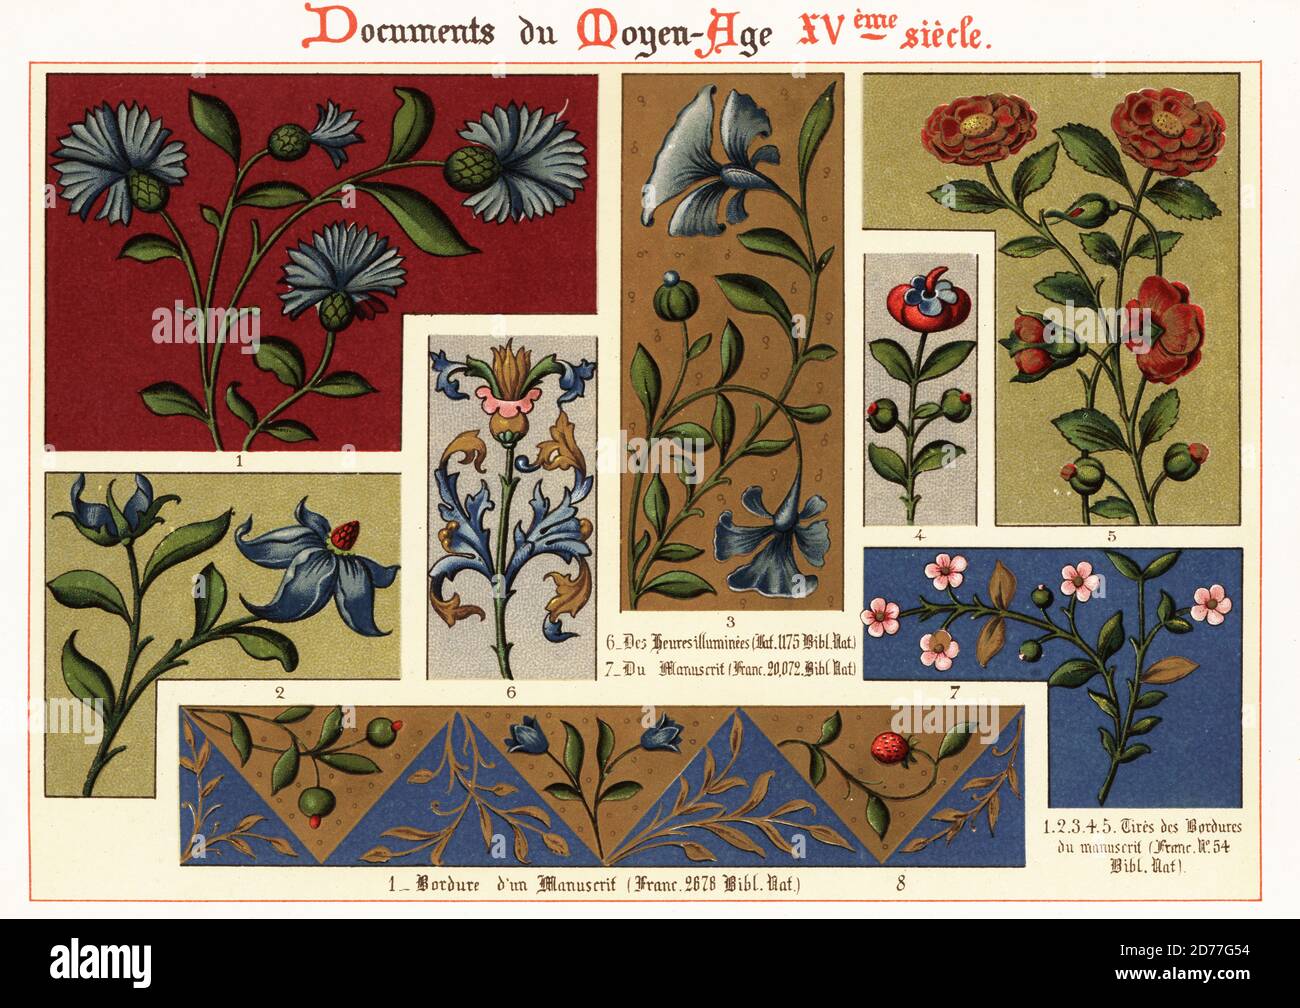 Decorative floral borders from 15th century illuminated manuscripts.  1-5 tires des bordures du manuscrit Franc. 54, Bib. Nat.,, 6 des Heures illuminess Latin 1175, Bib. Nat., 7 du manuscrit Franc. 20.072, Bib. Nat., 8 Bordure d’un manuscrit Franc. 2678, Bib. Nat. Chromolithograph designed and lithographed by Ernst Guillot from Ornementation des Manuscrits au Moyen-Age, XVe Siecle(Ornamentation from Manuscripts of the Middle Ages, 15th century), Paris, 1890. Stock Photo